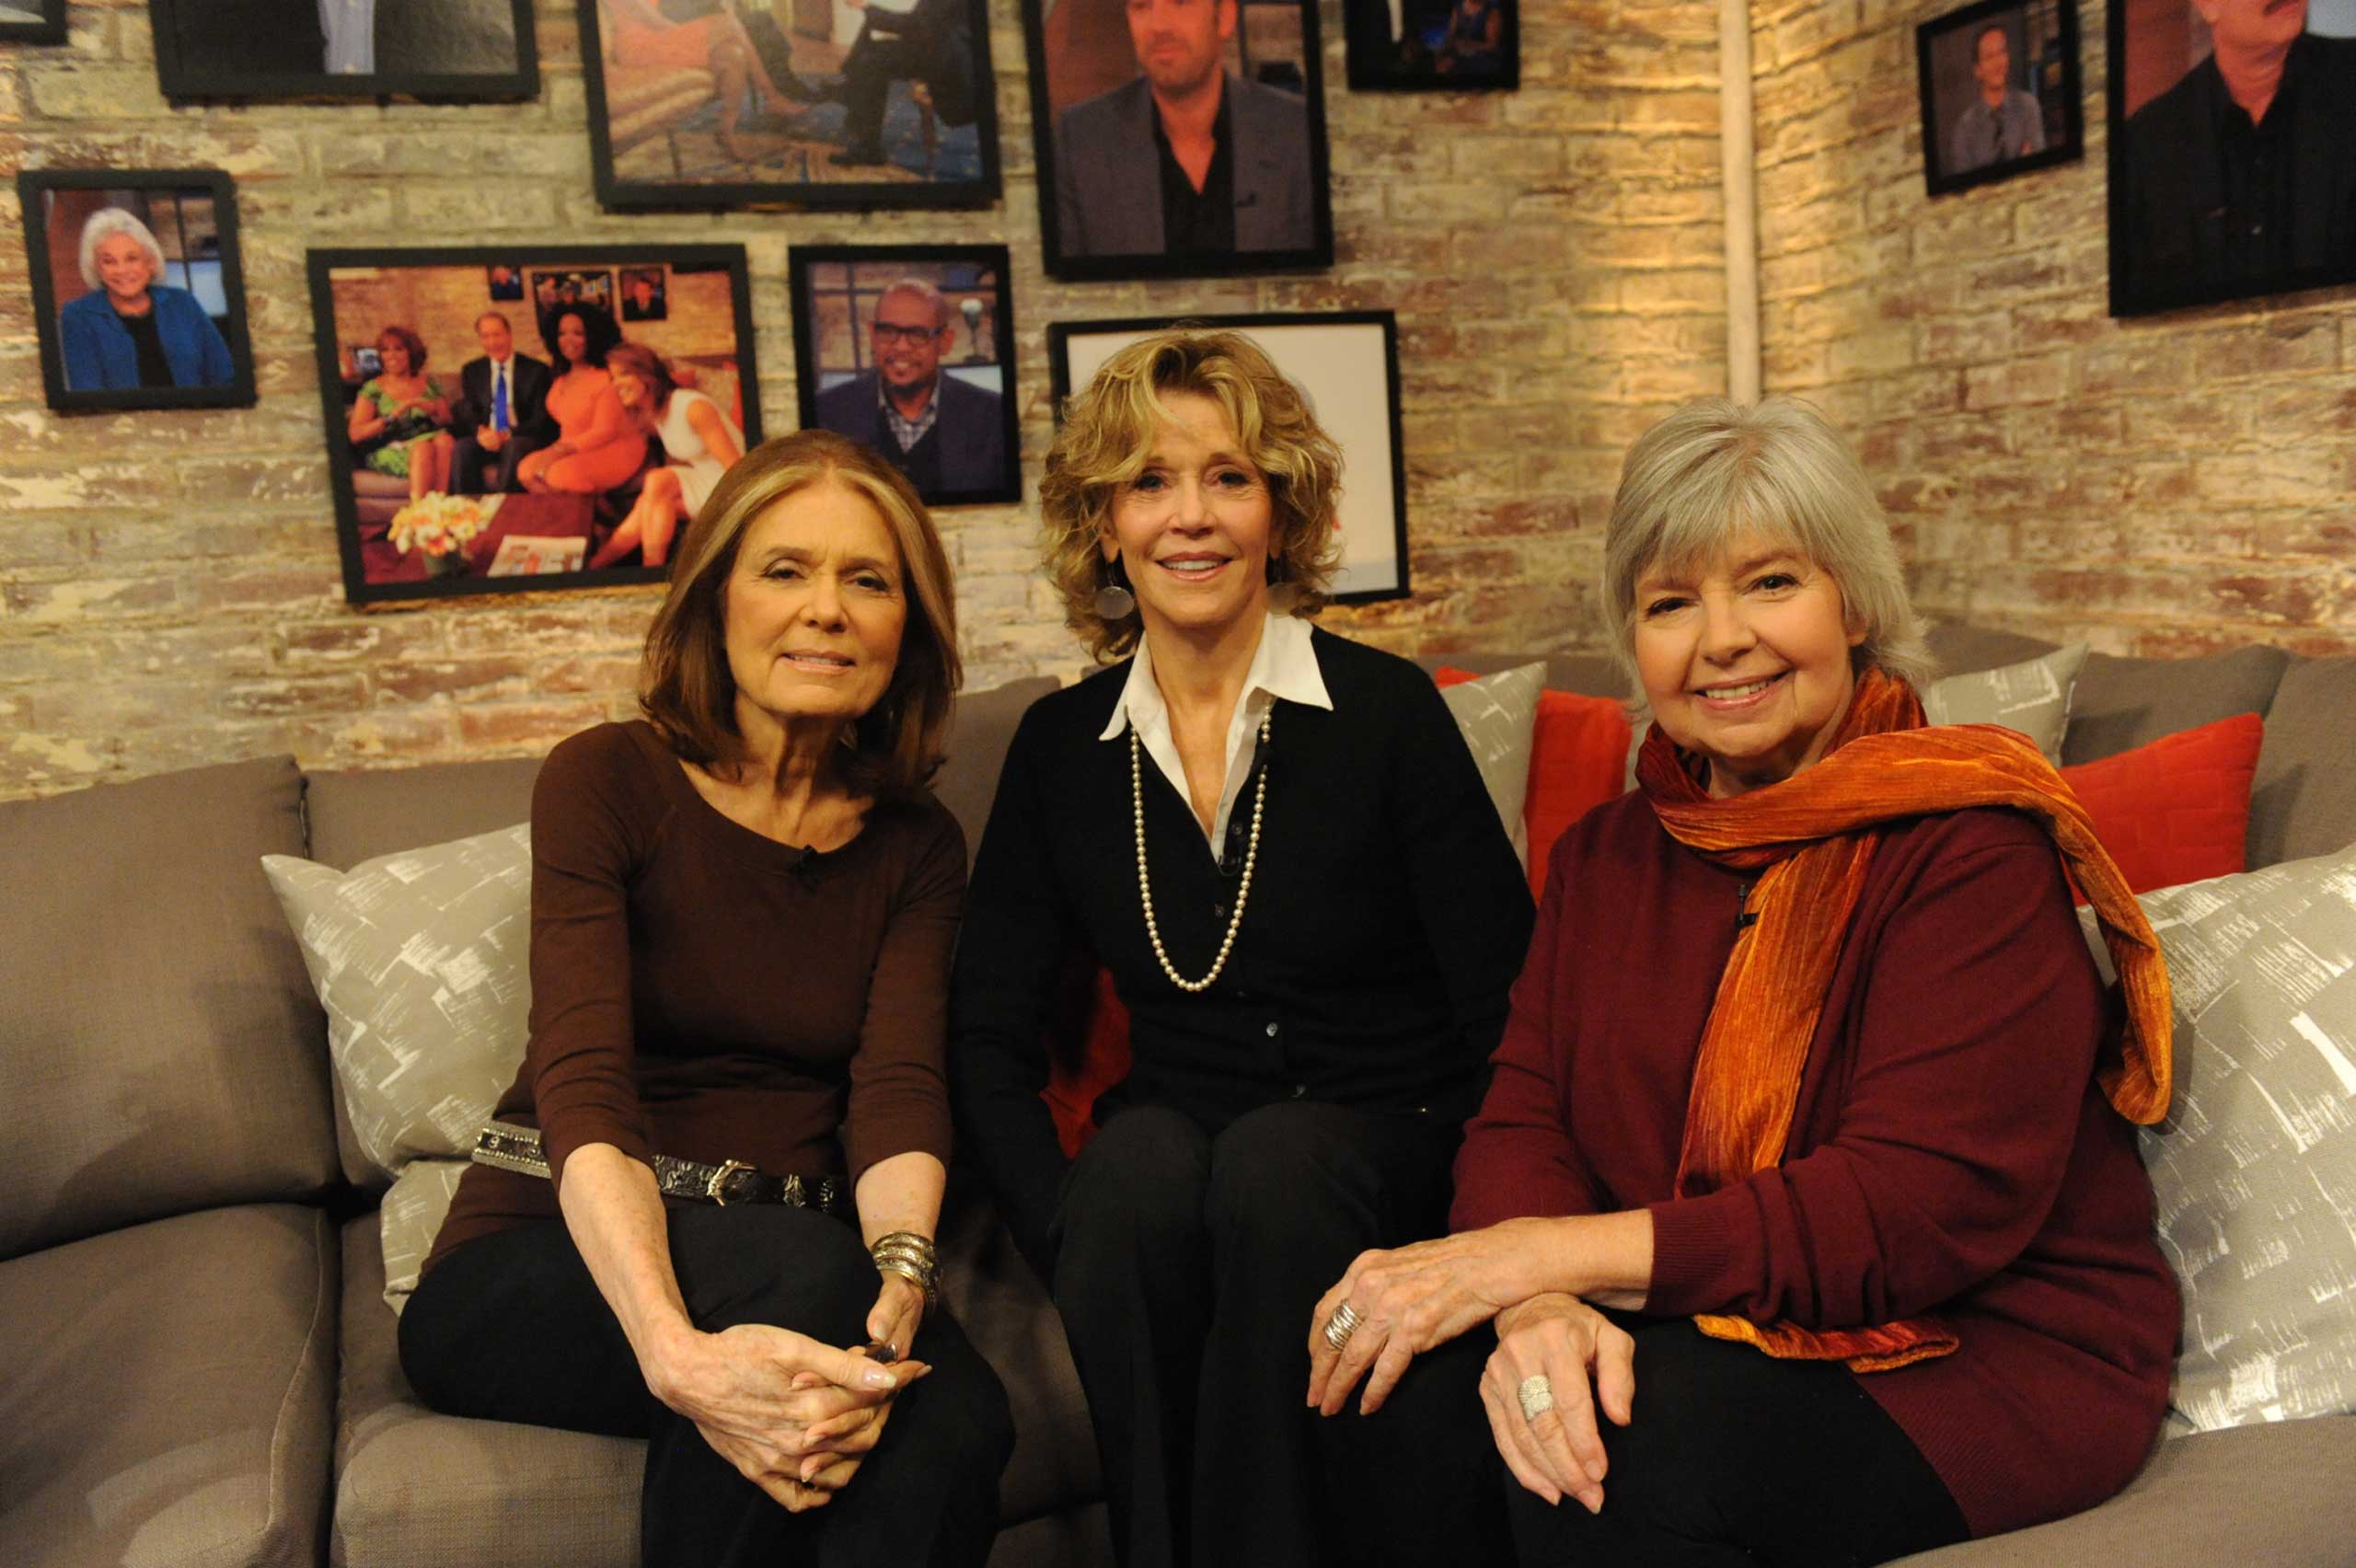 Gloria Steinem, Jane Fonda, and Robin Morgan, Co-Founders of the Women's Media Center